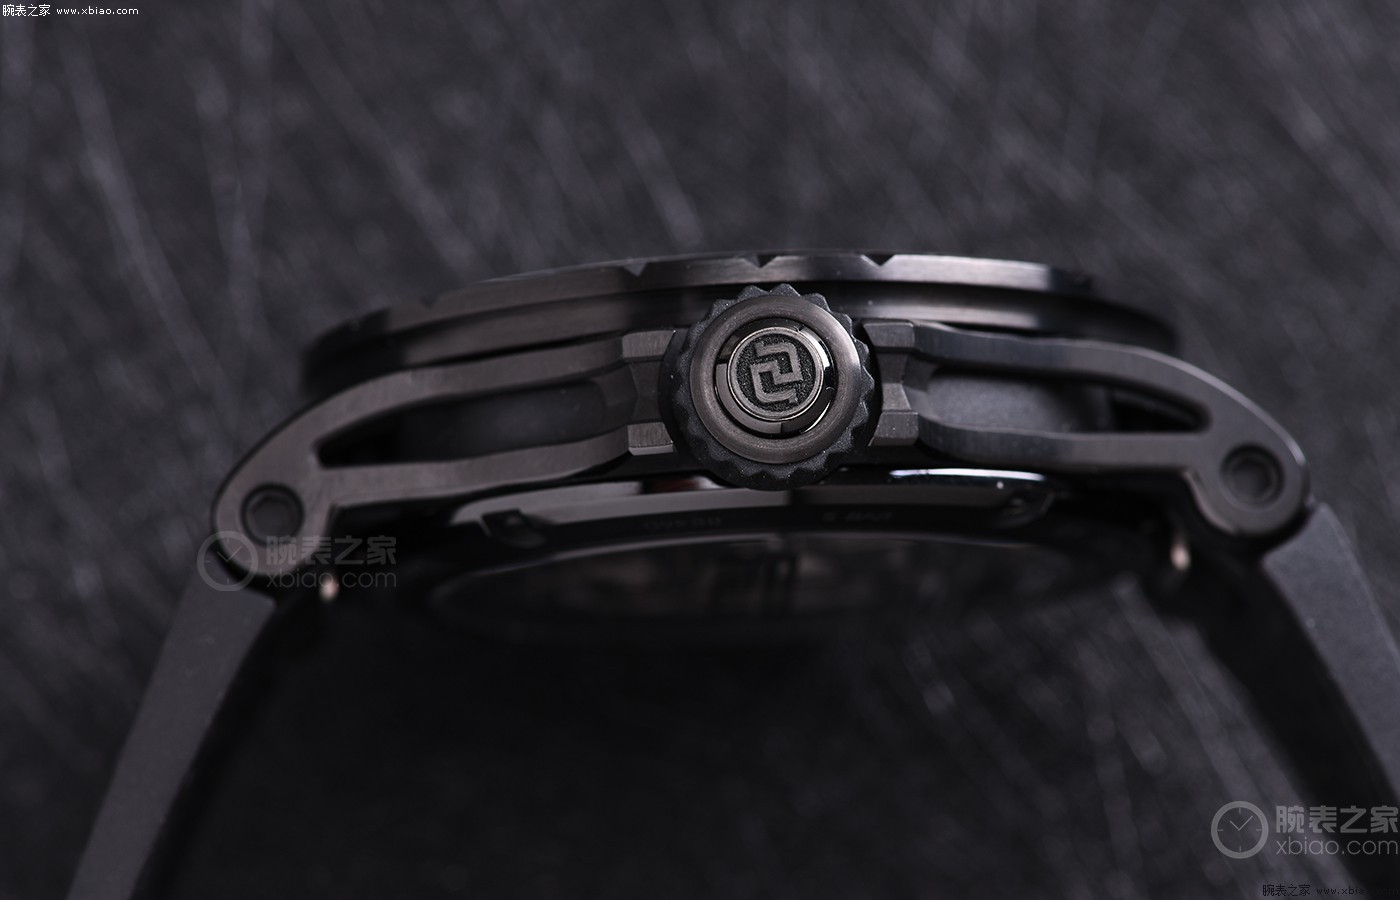 一触即发 品评罗杰杜彼全新升级Excalibur Spider Pirelli腕表